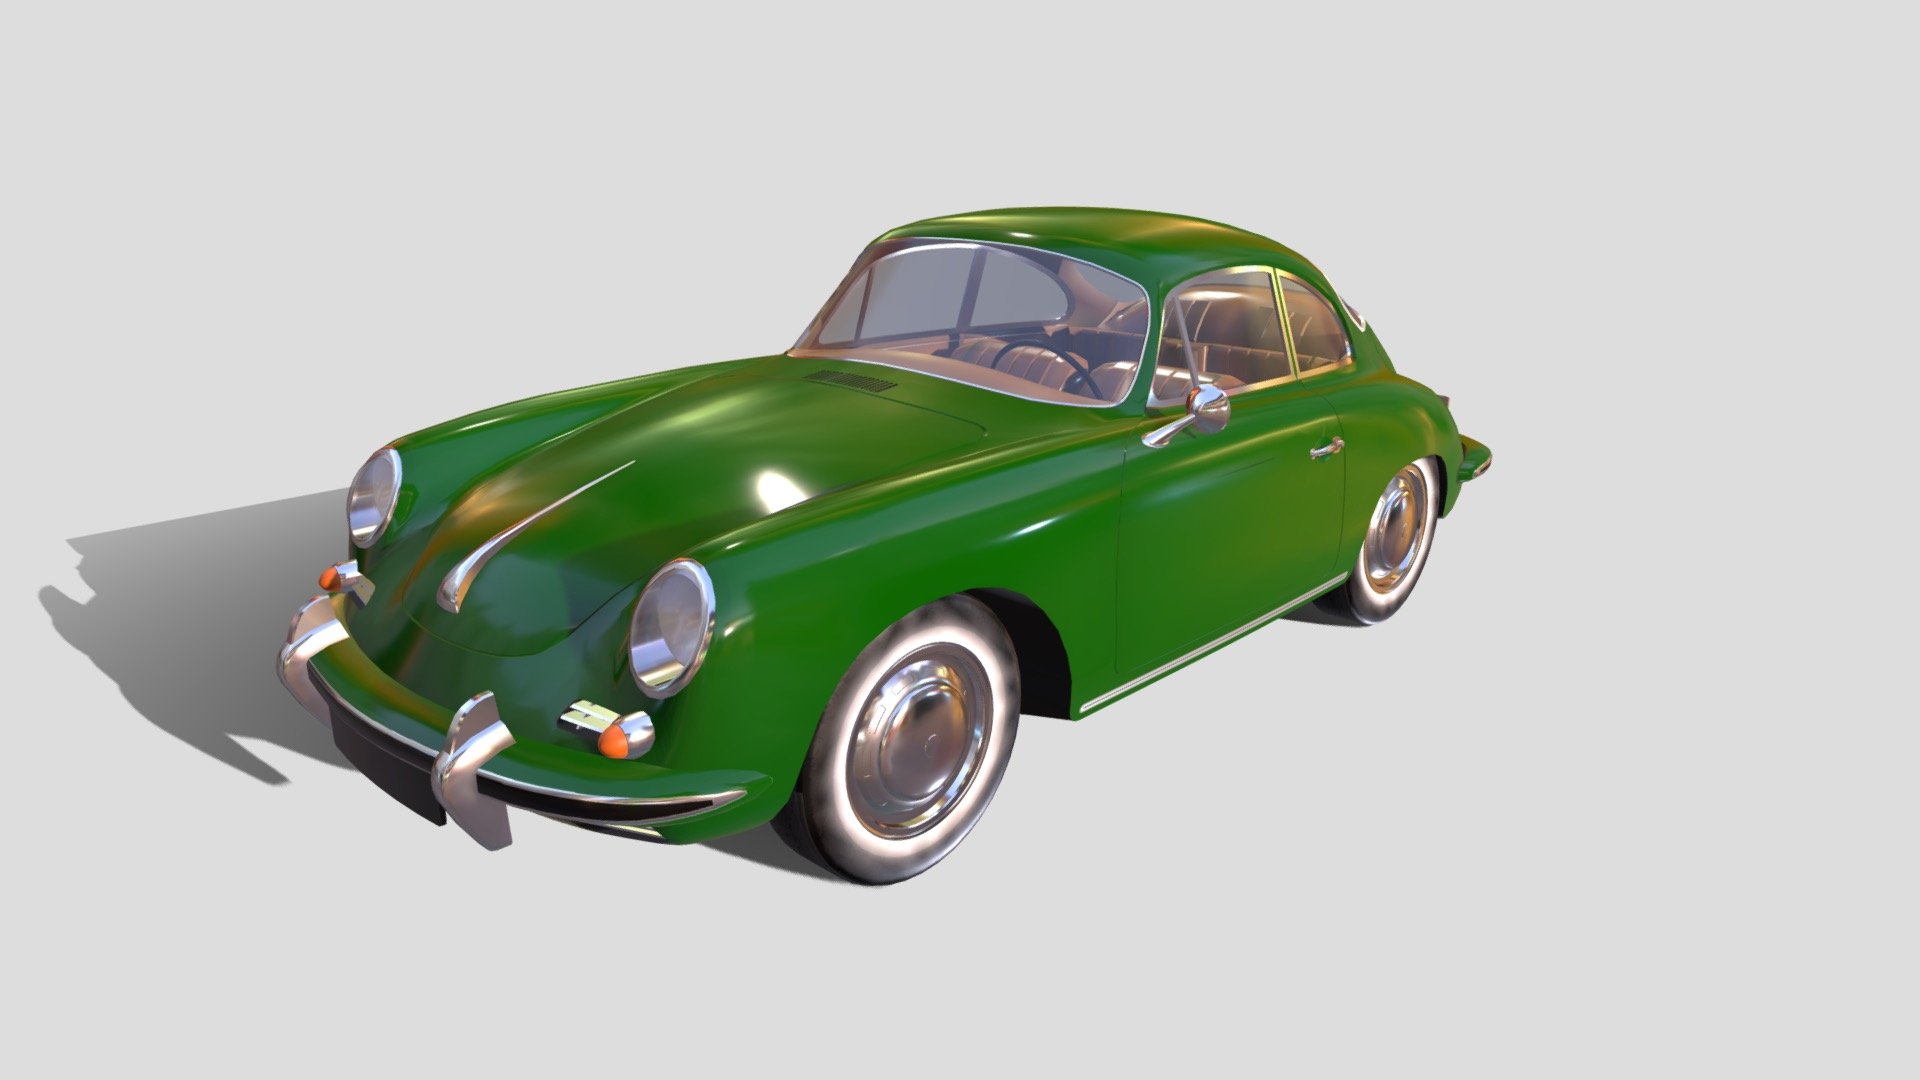 LowPoly model of classic Porsche - 356C for model game - Porsche - 356C (1964) - 3D model by mrDiG 3d model